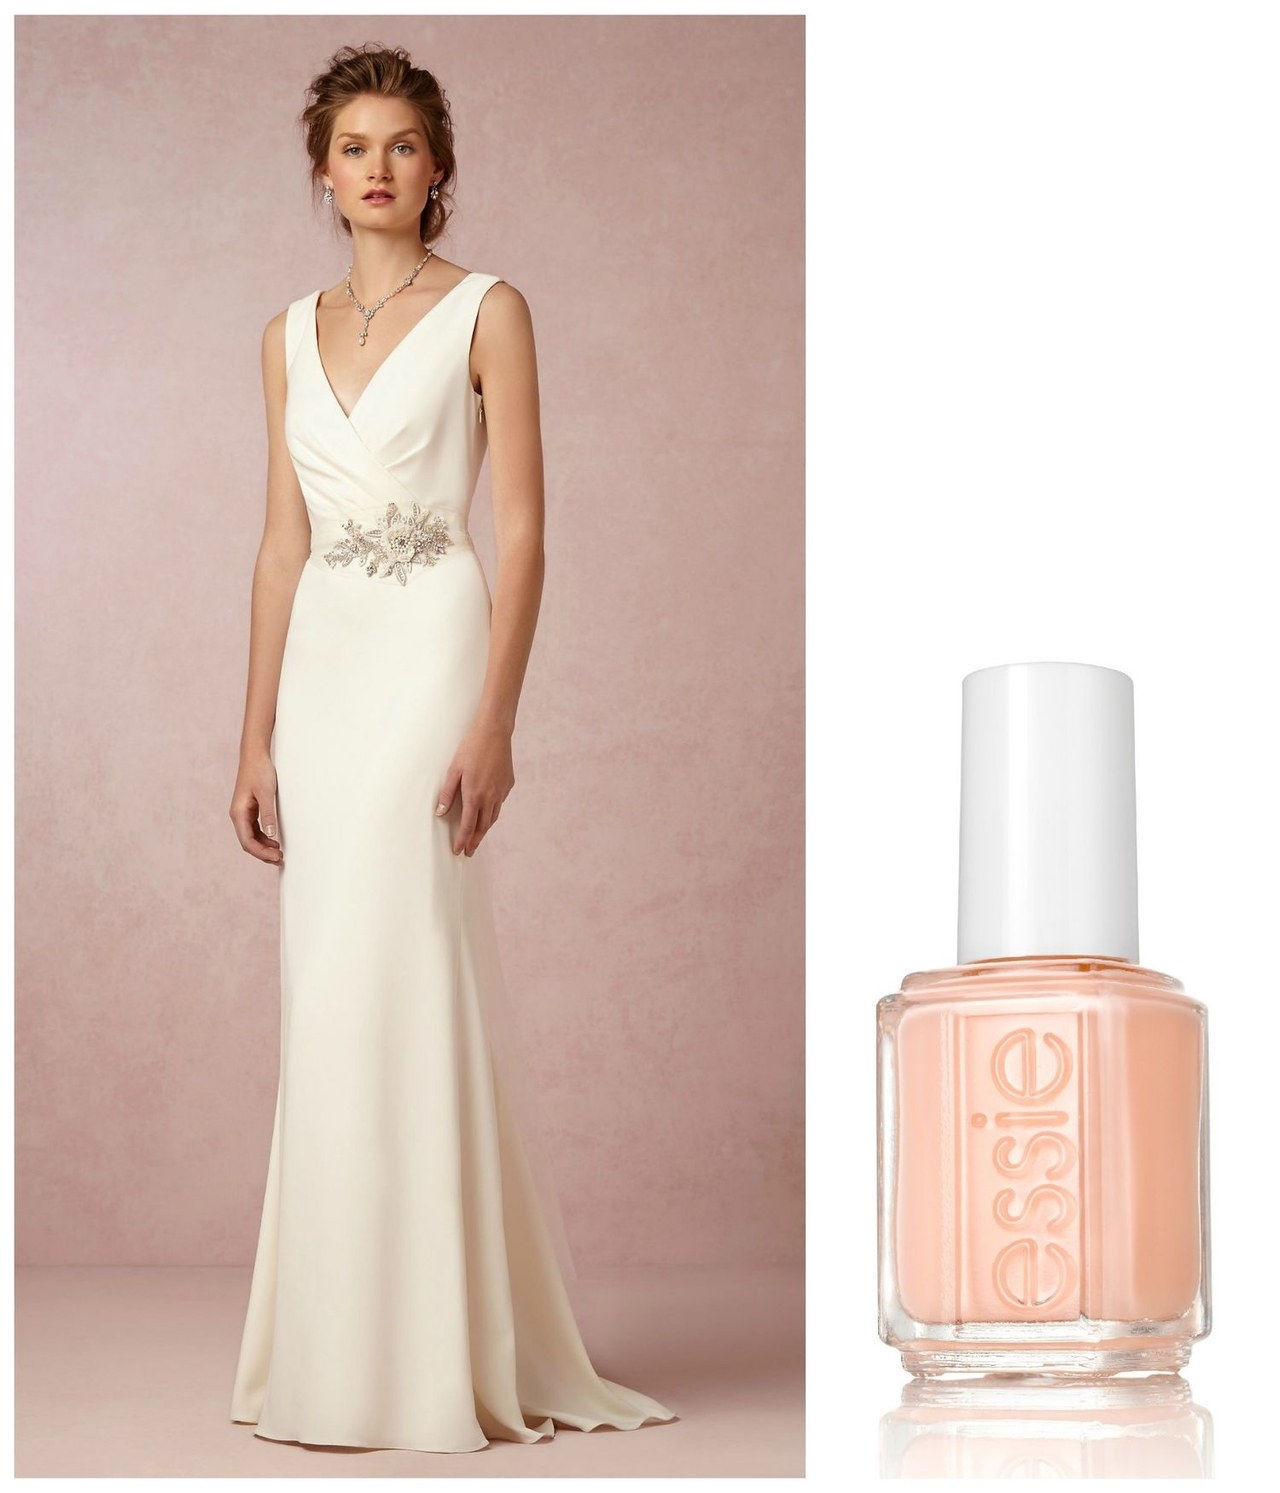 3 best wedding nail polish for brides 0408 courtesy